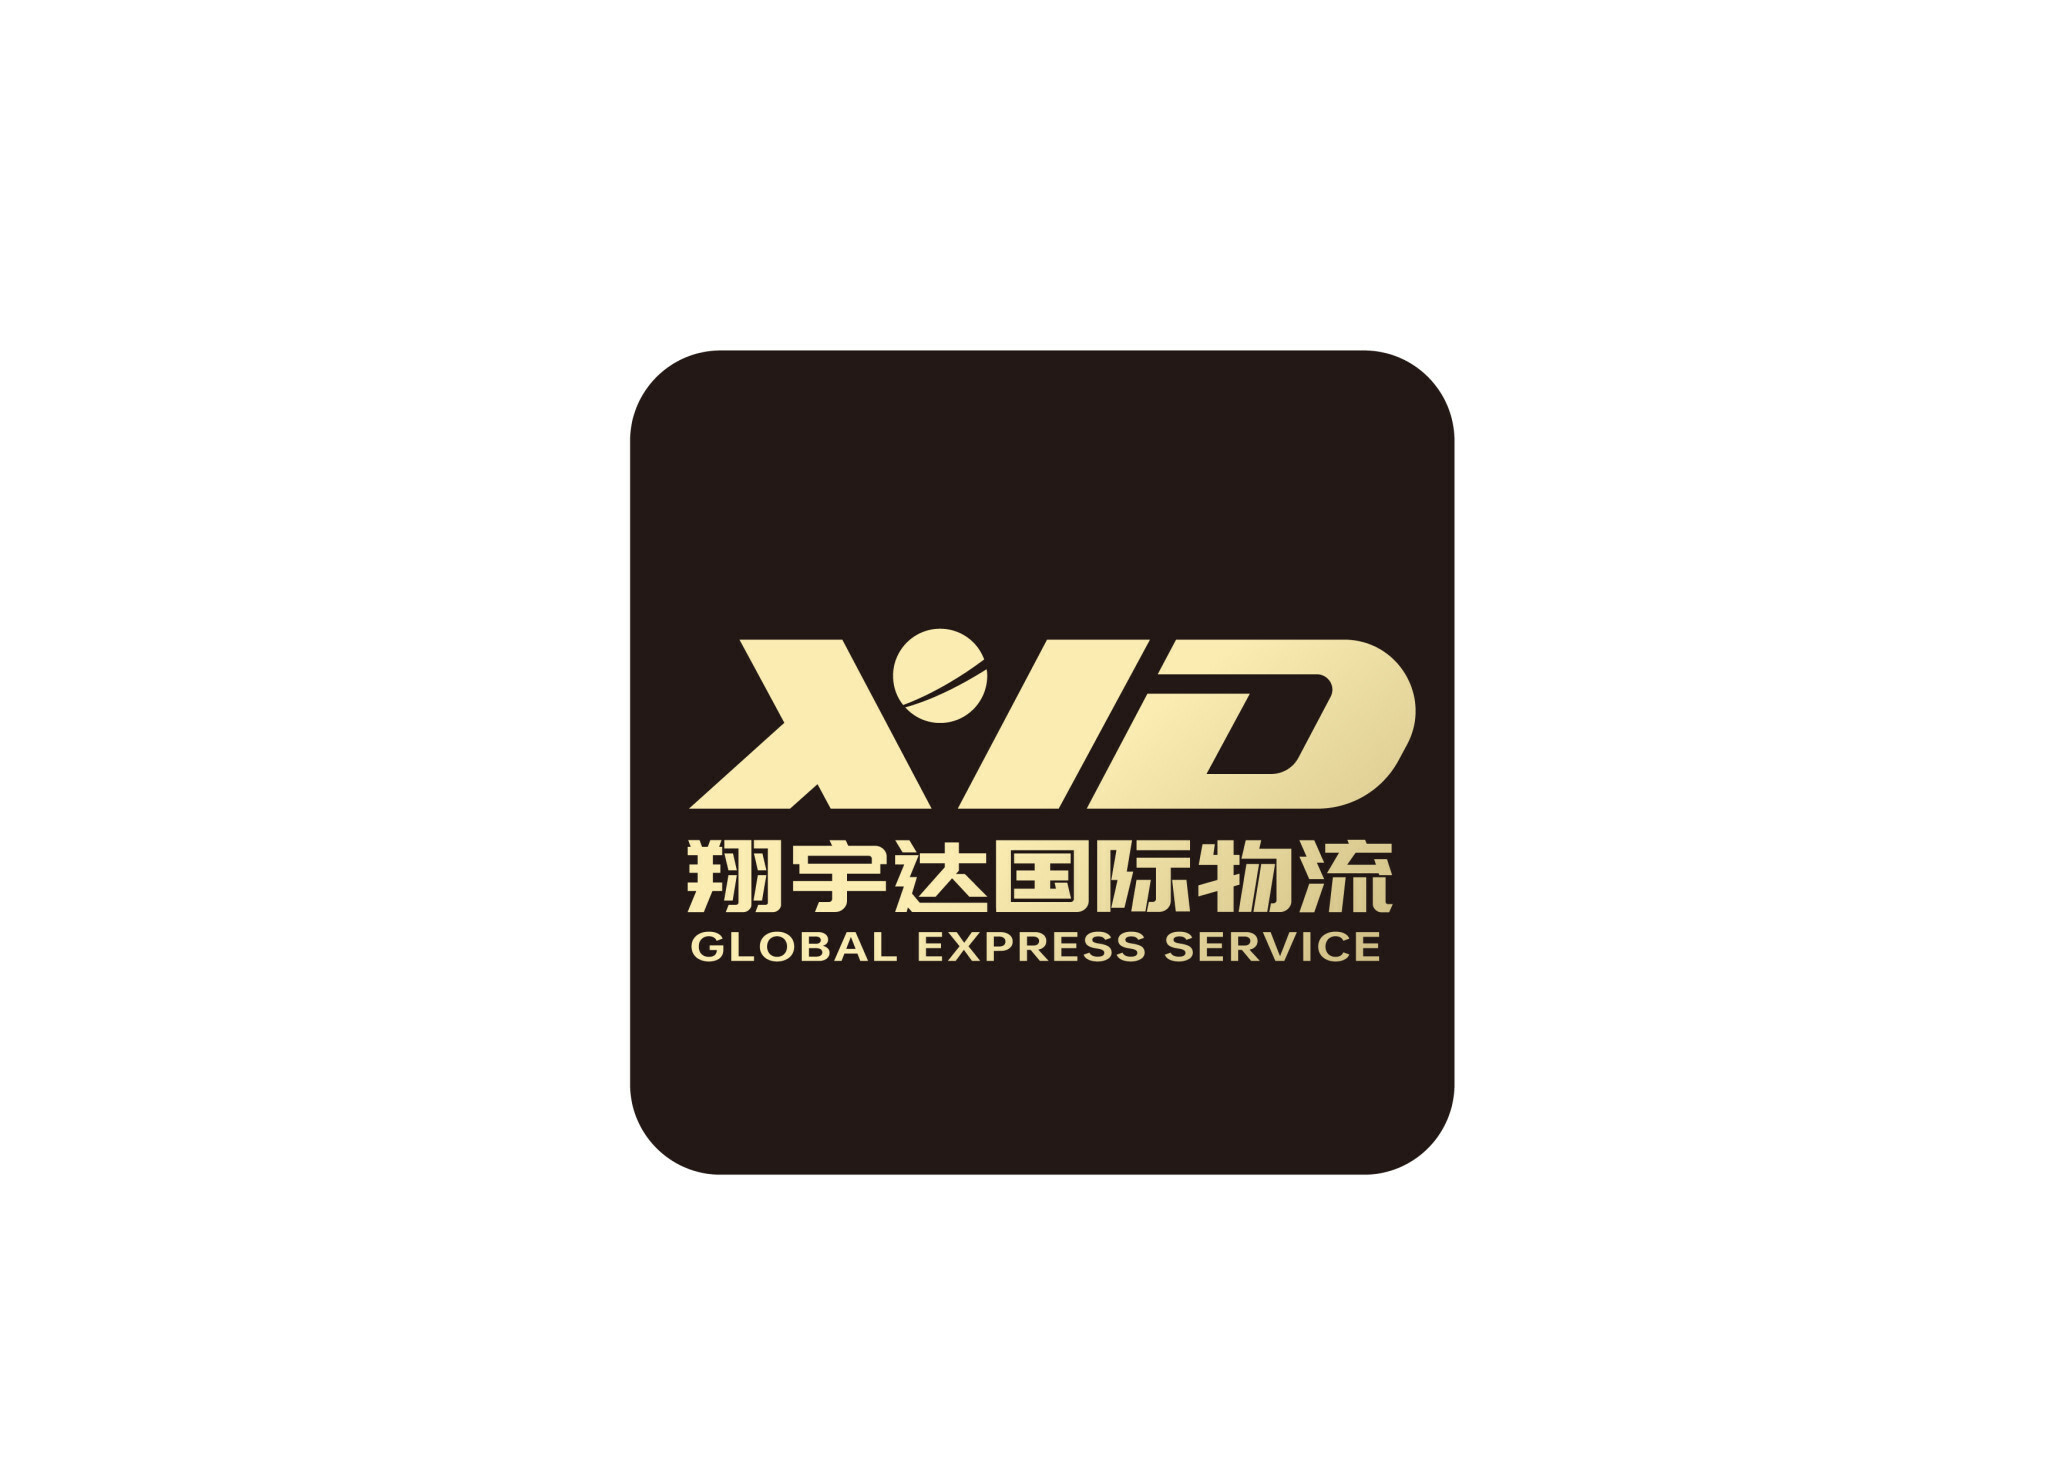 Logo XYD Việt Nam